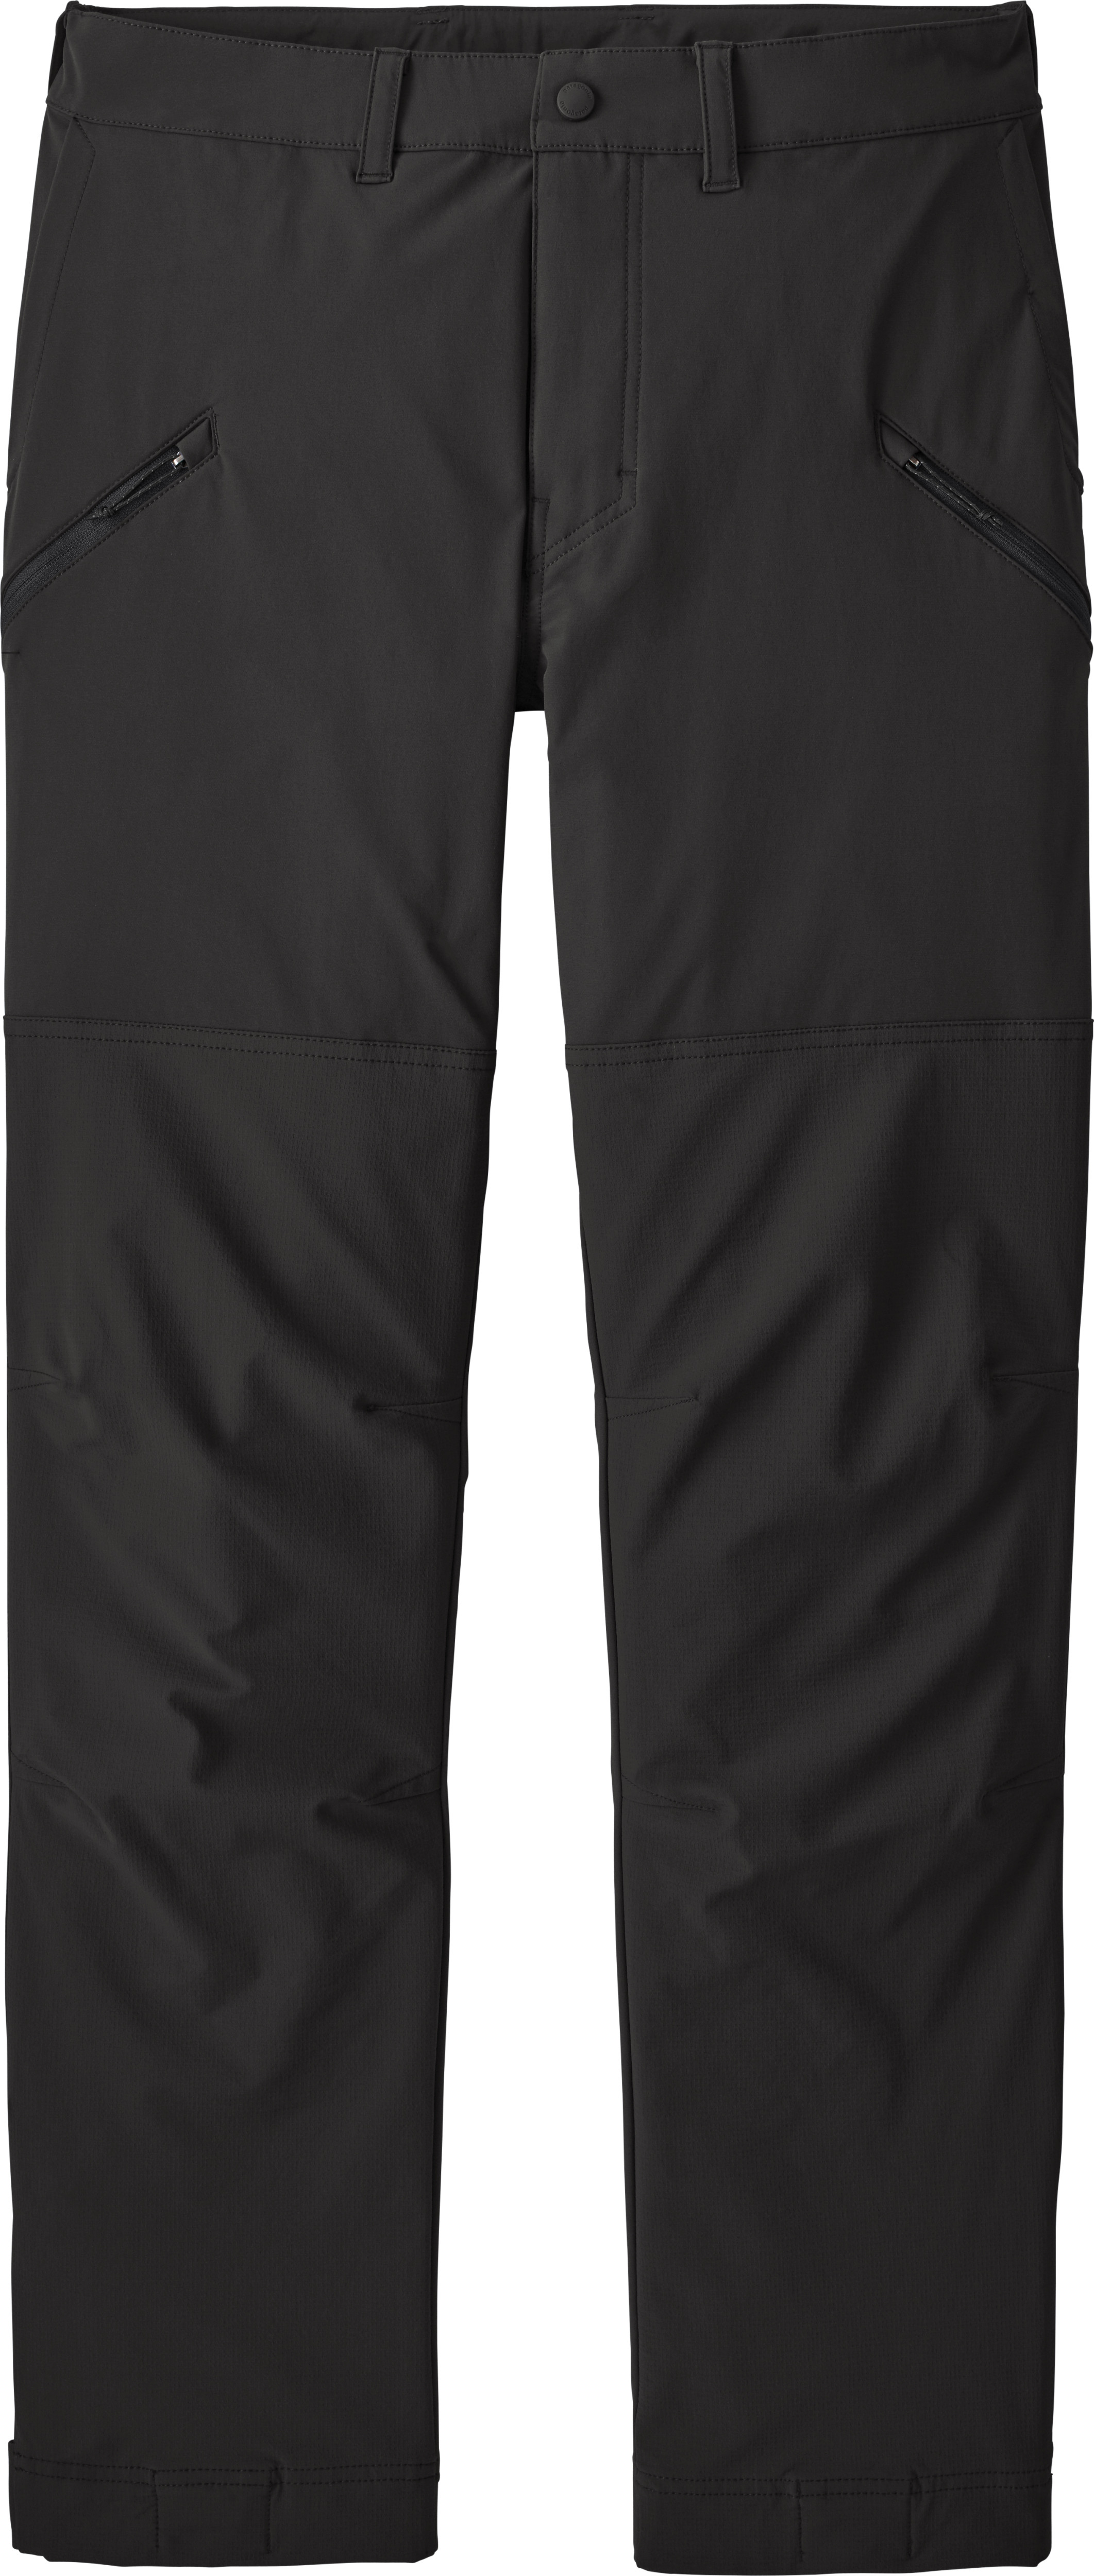 Men's Point Peak Trail Pants - Regular Black, Buy Men's Point Peak Trail  Pants - Regular Black here